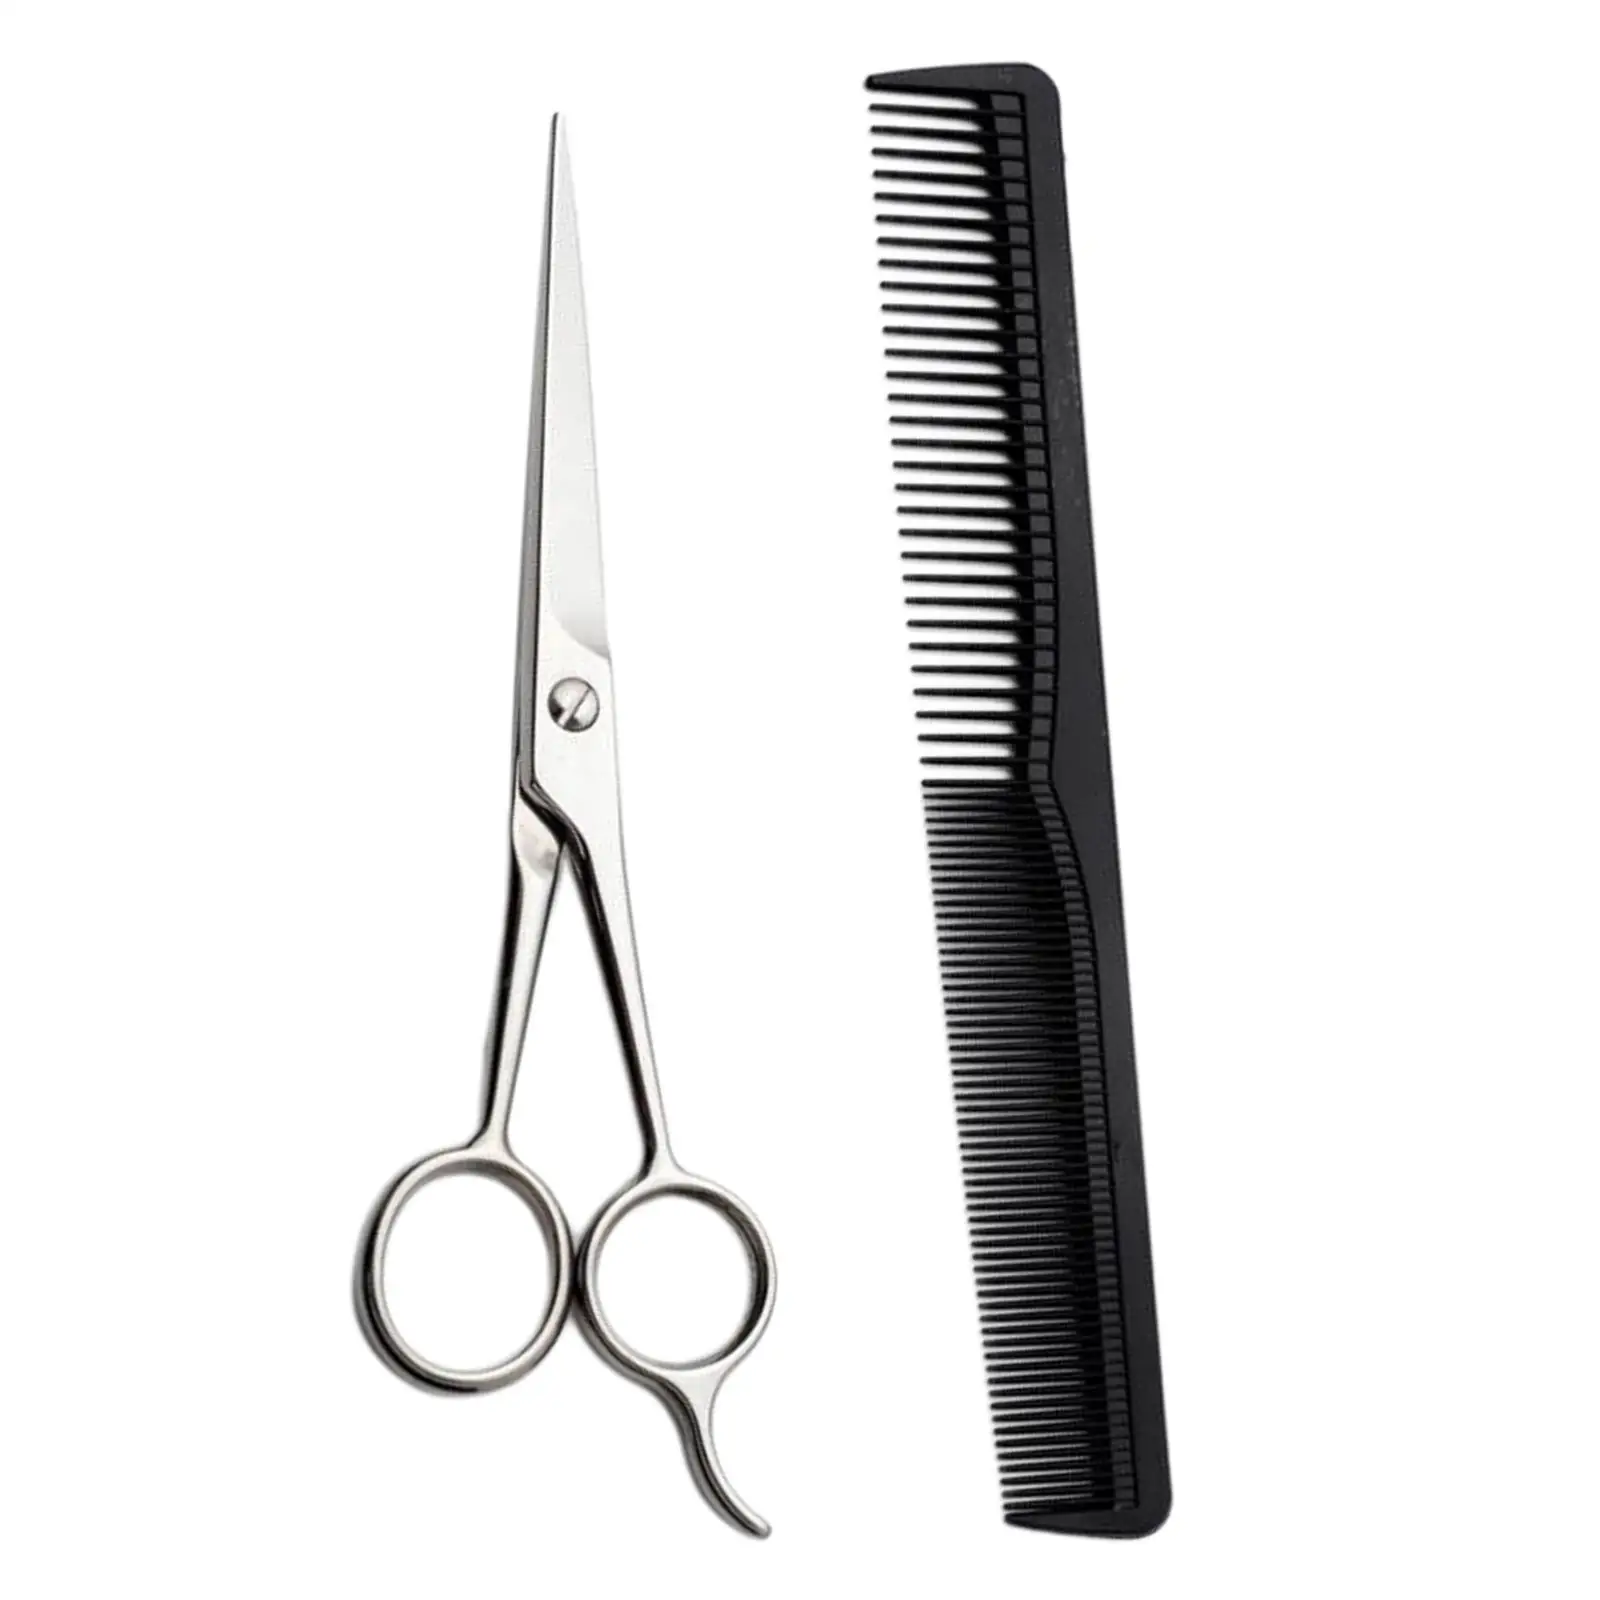 Barber Hair Cutting Scissors Hairdresser Haircut Haircut Scissors with Comb